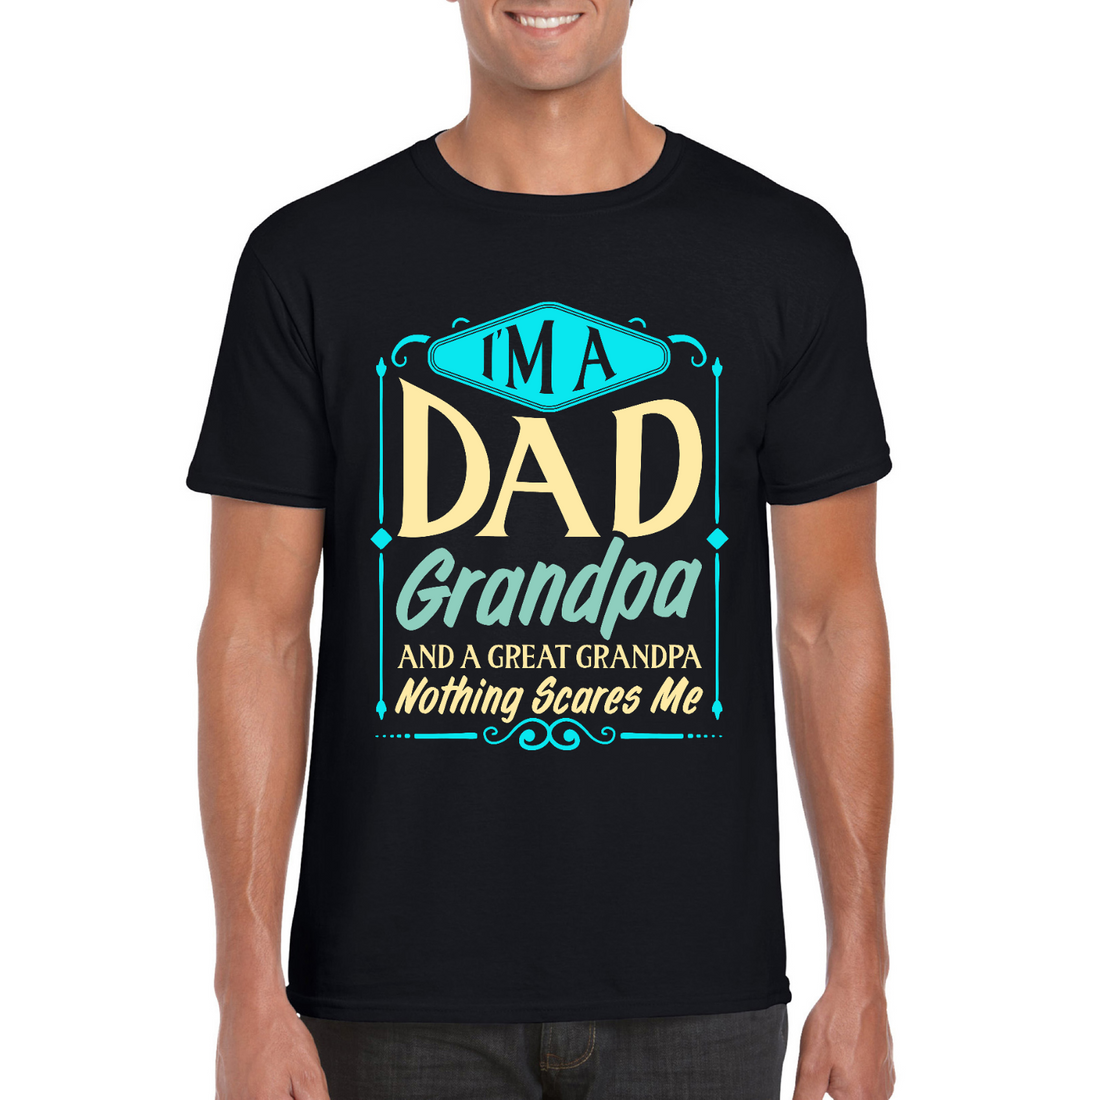 Great Grandpa | Black Tee Shirt